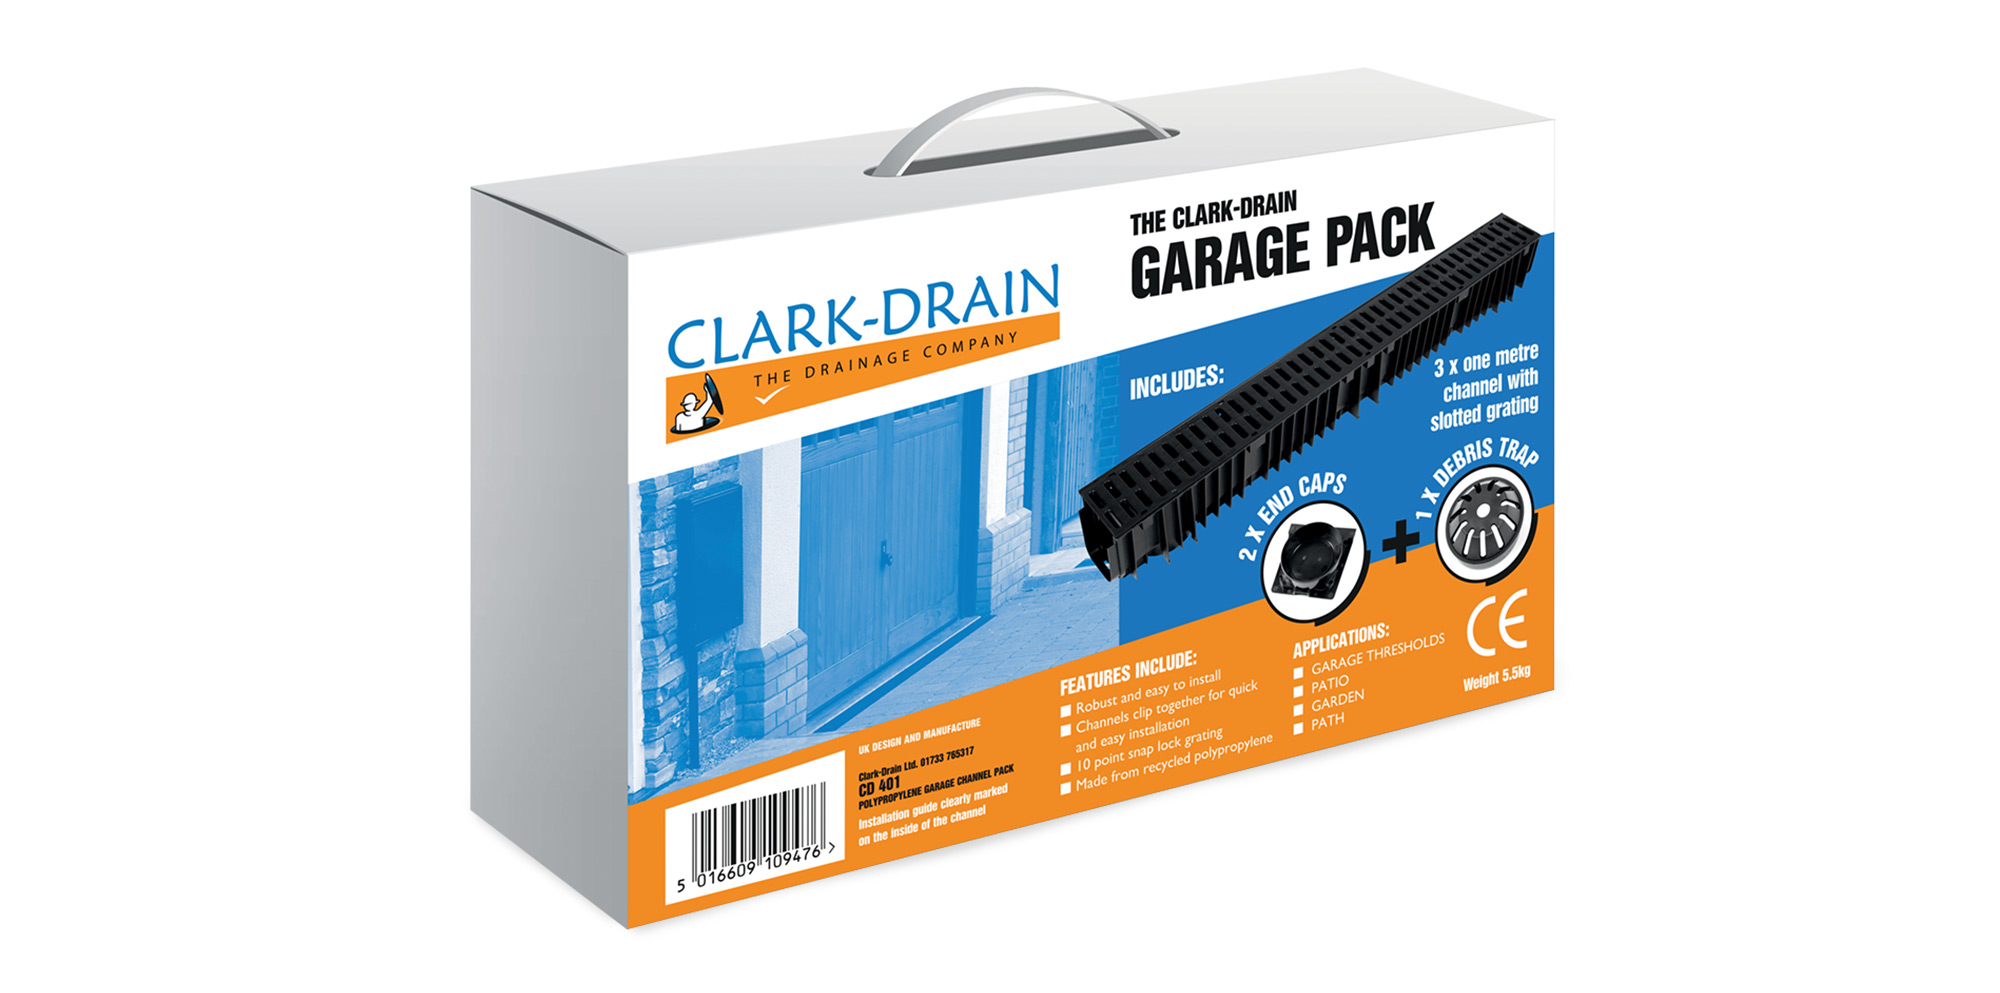 Clark Drain packaging design